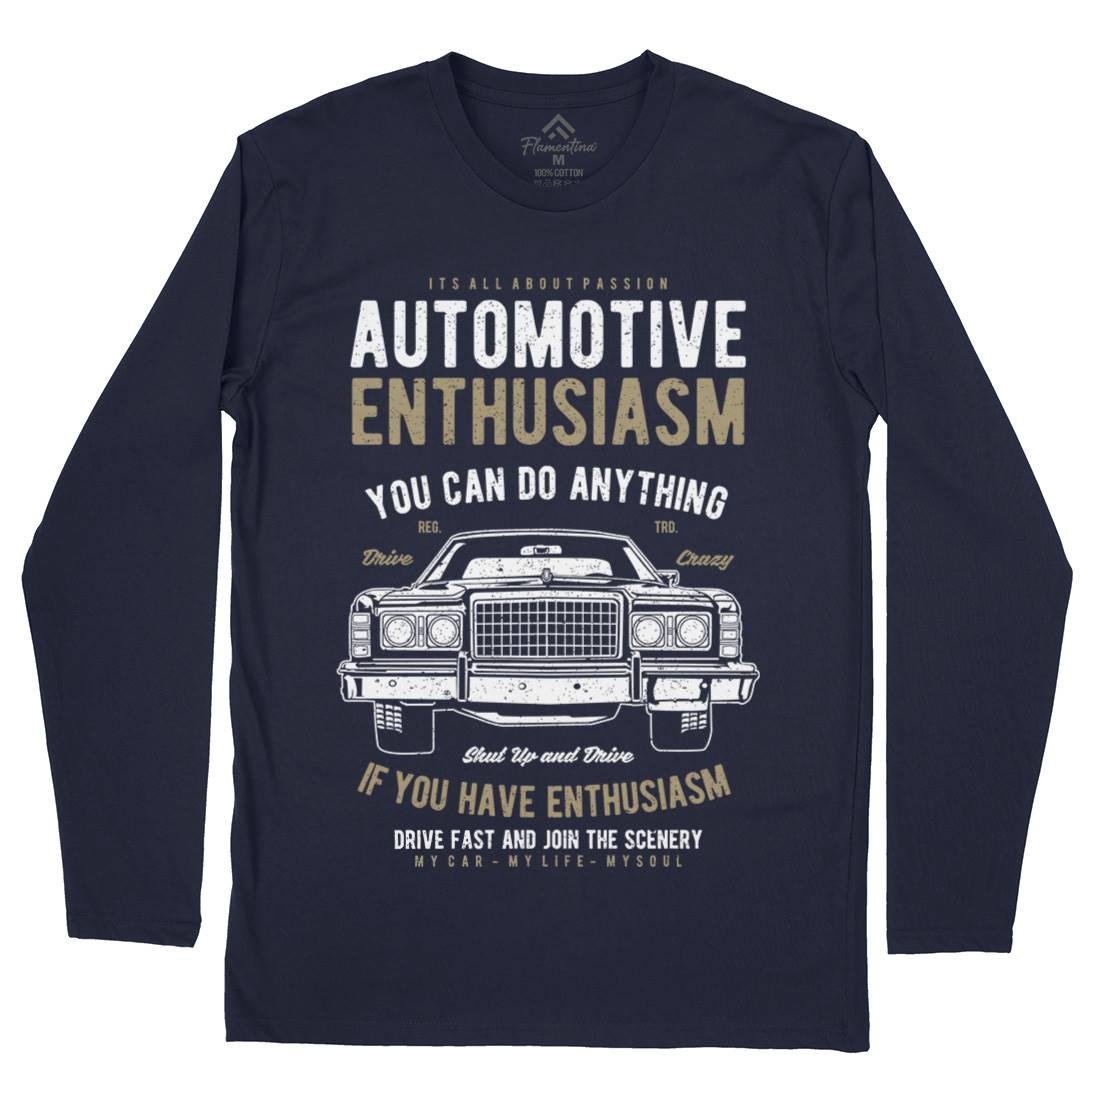 Automotive Enthusiasm Mens Long Sleeve T-Shirt Cars A614